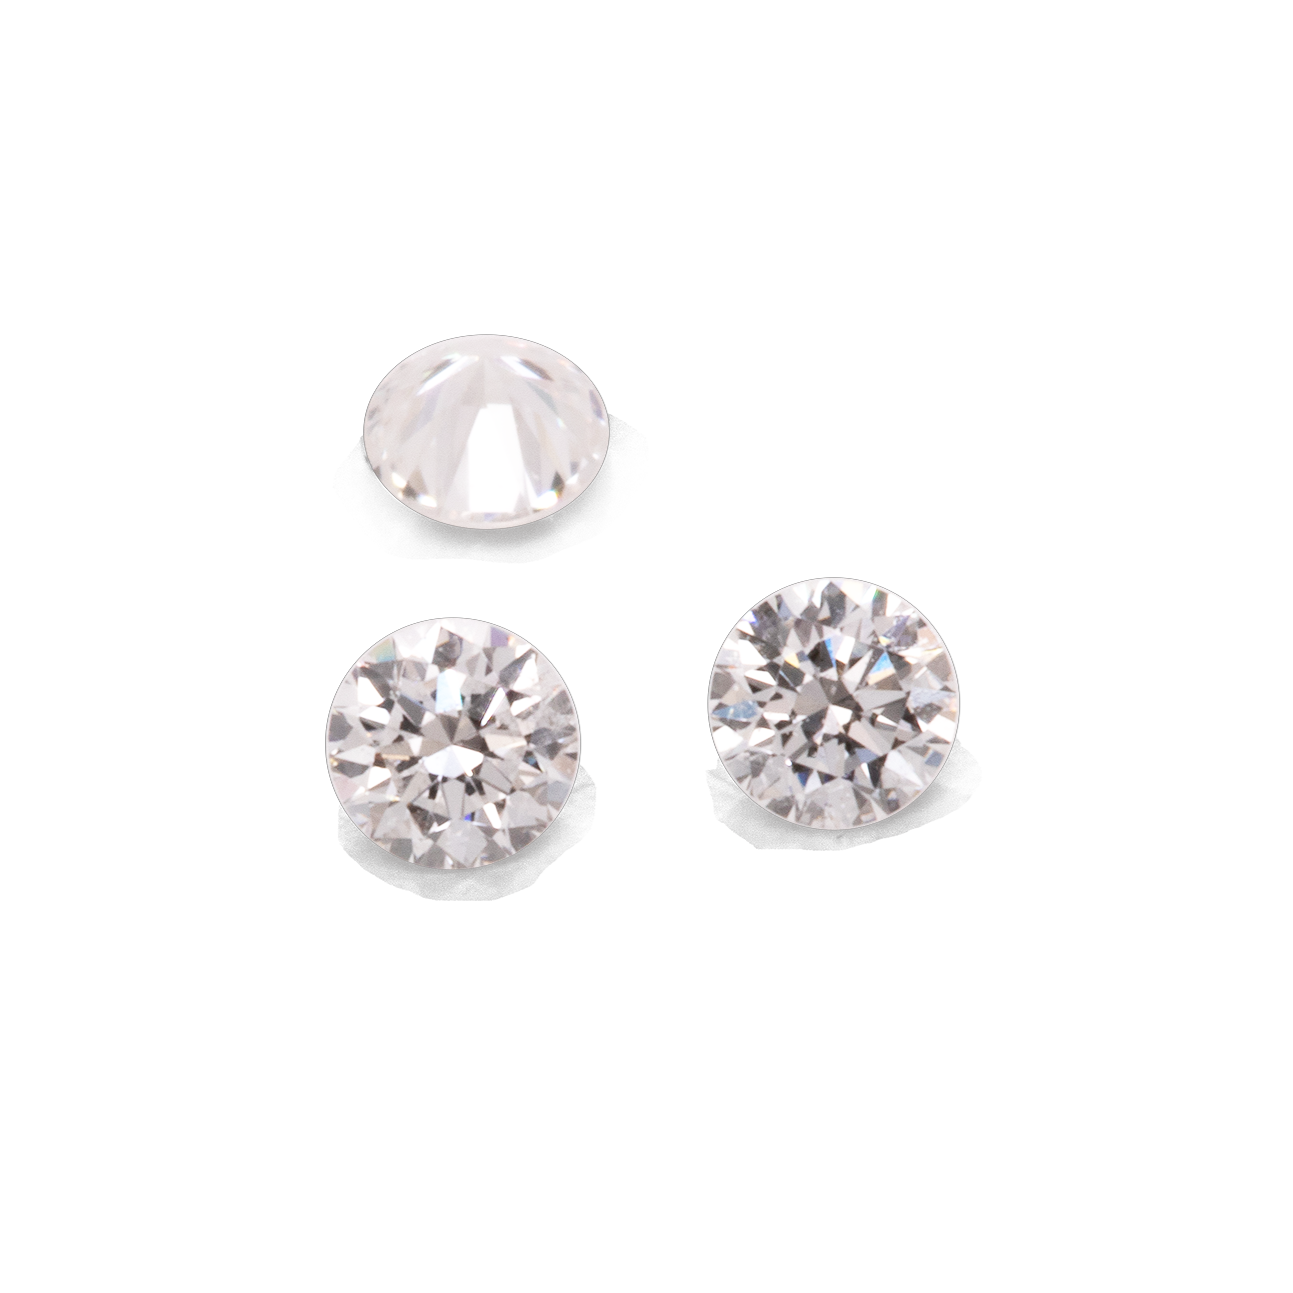 Diamant - weiß, (TW), VS1, rund, 2,2 mm, ca. 0,04 cts, Nr. D11013